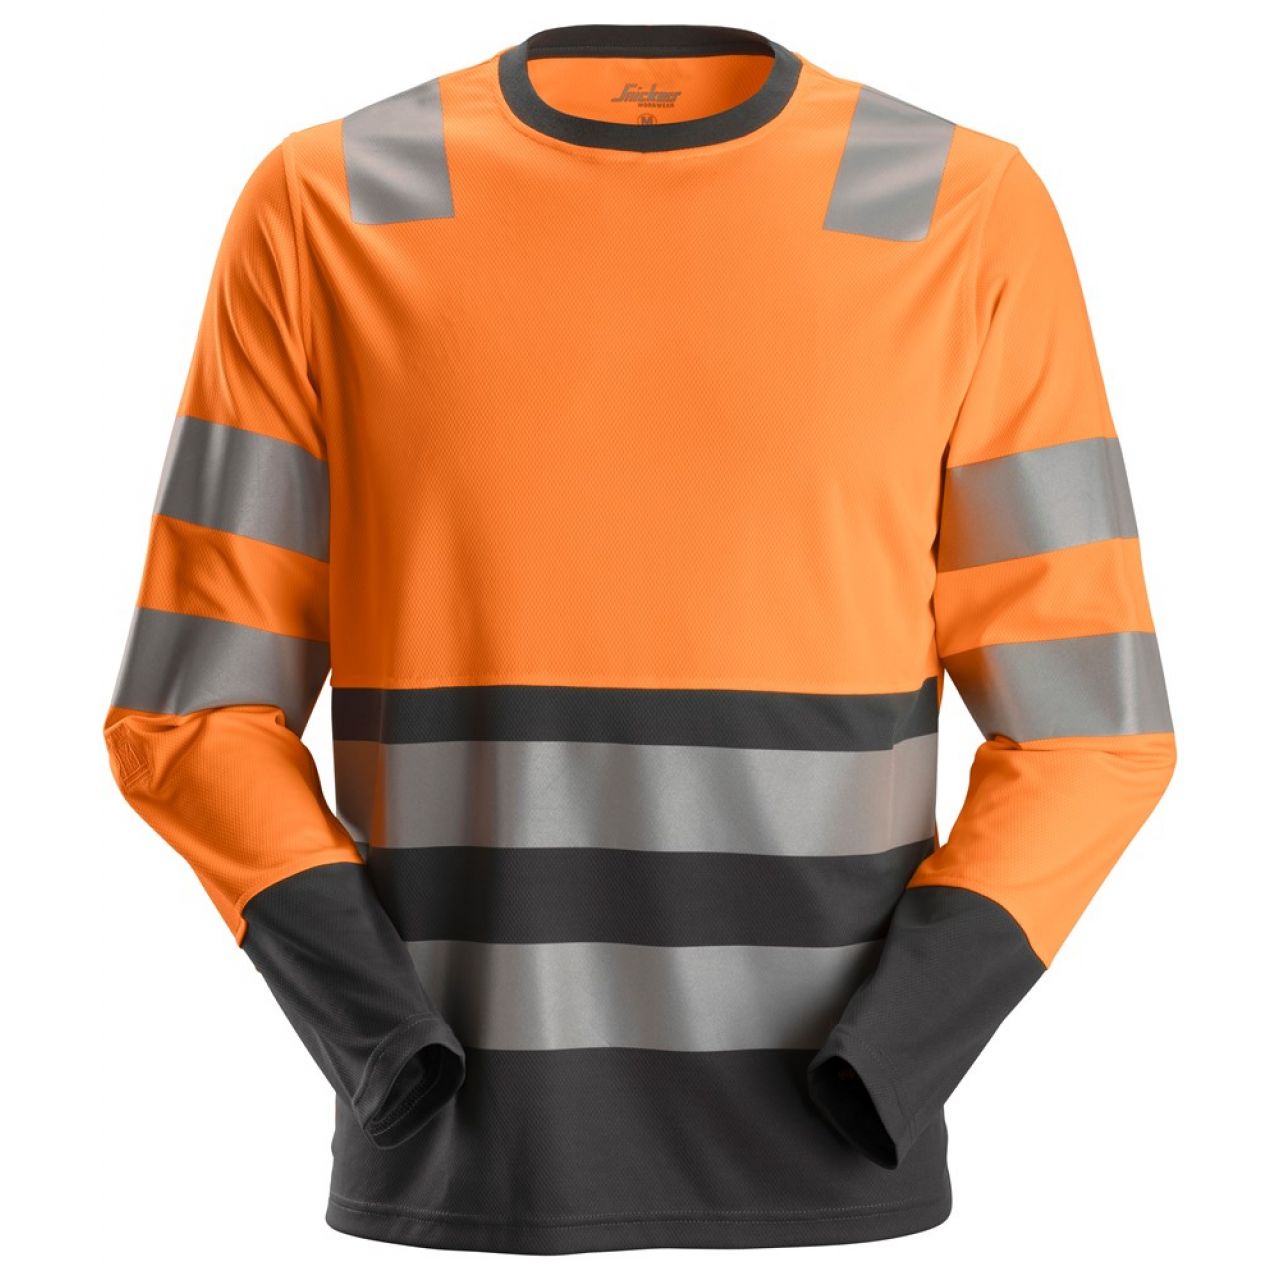 2433 Camiseta de manga larga de alta visibilidad clase 2 naranja-gris acero talla L